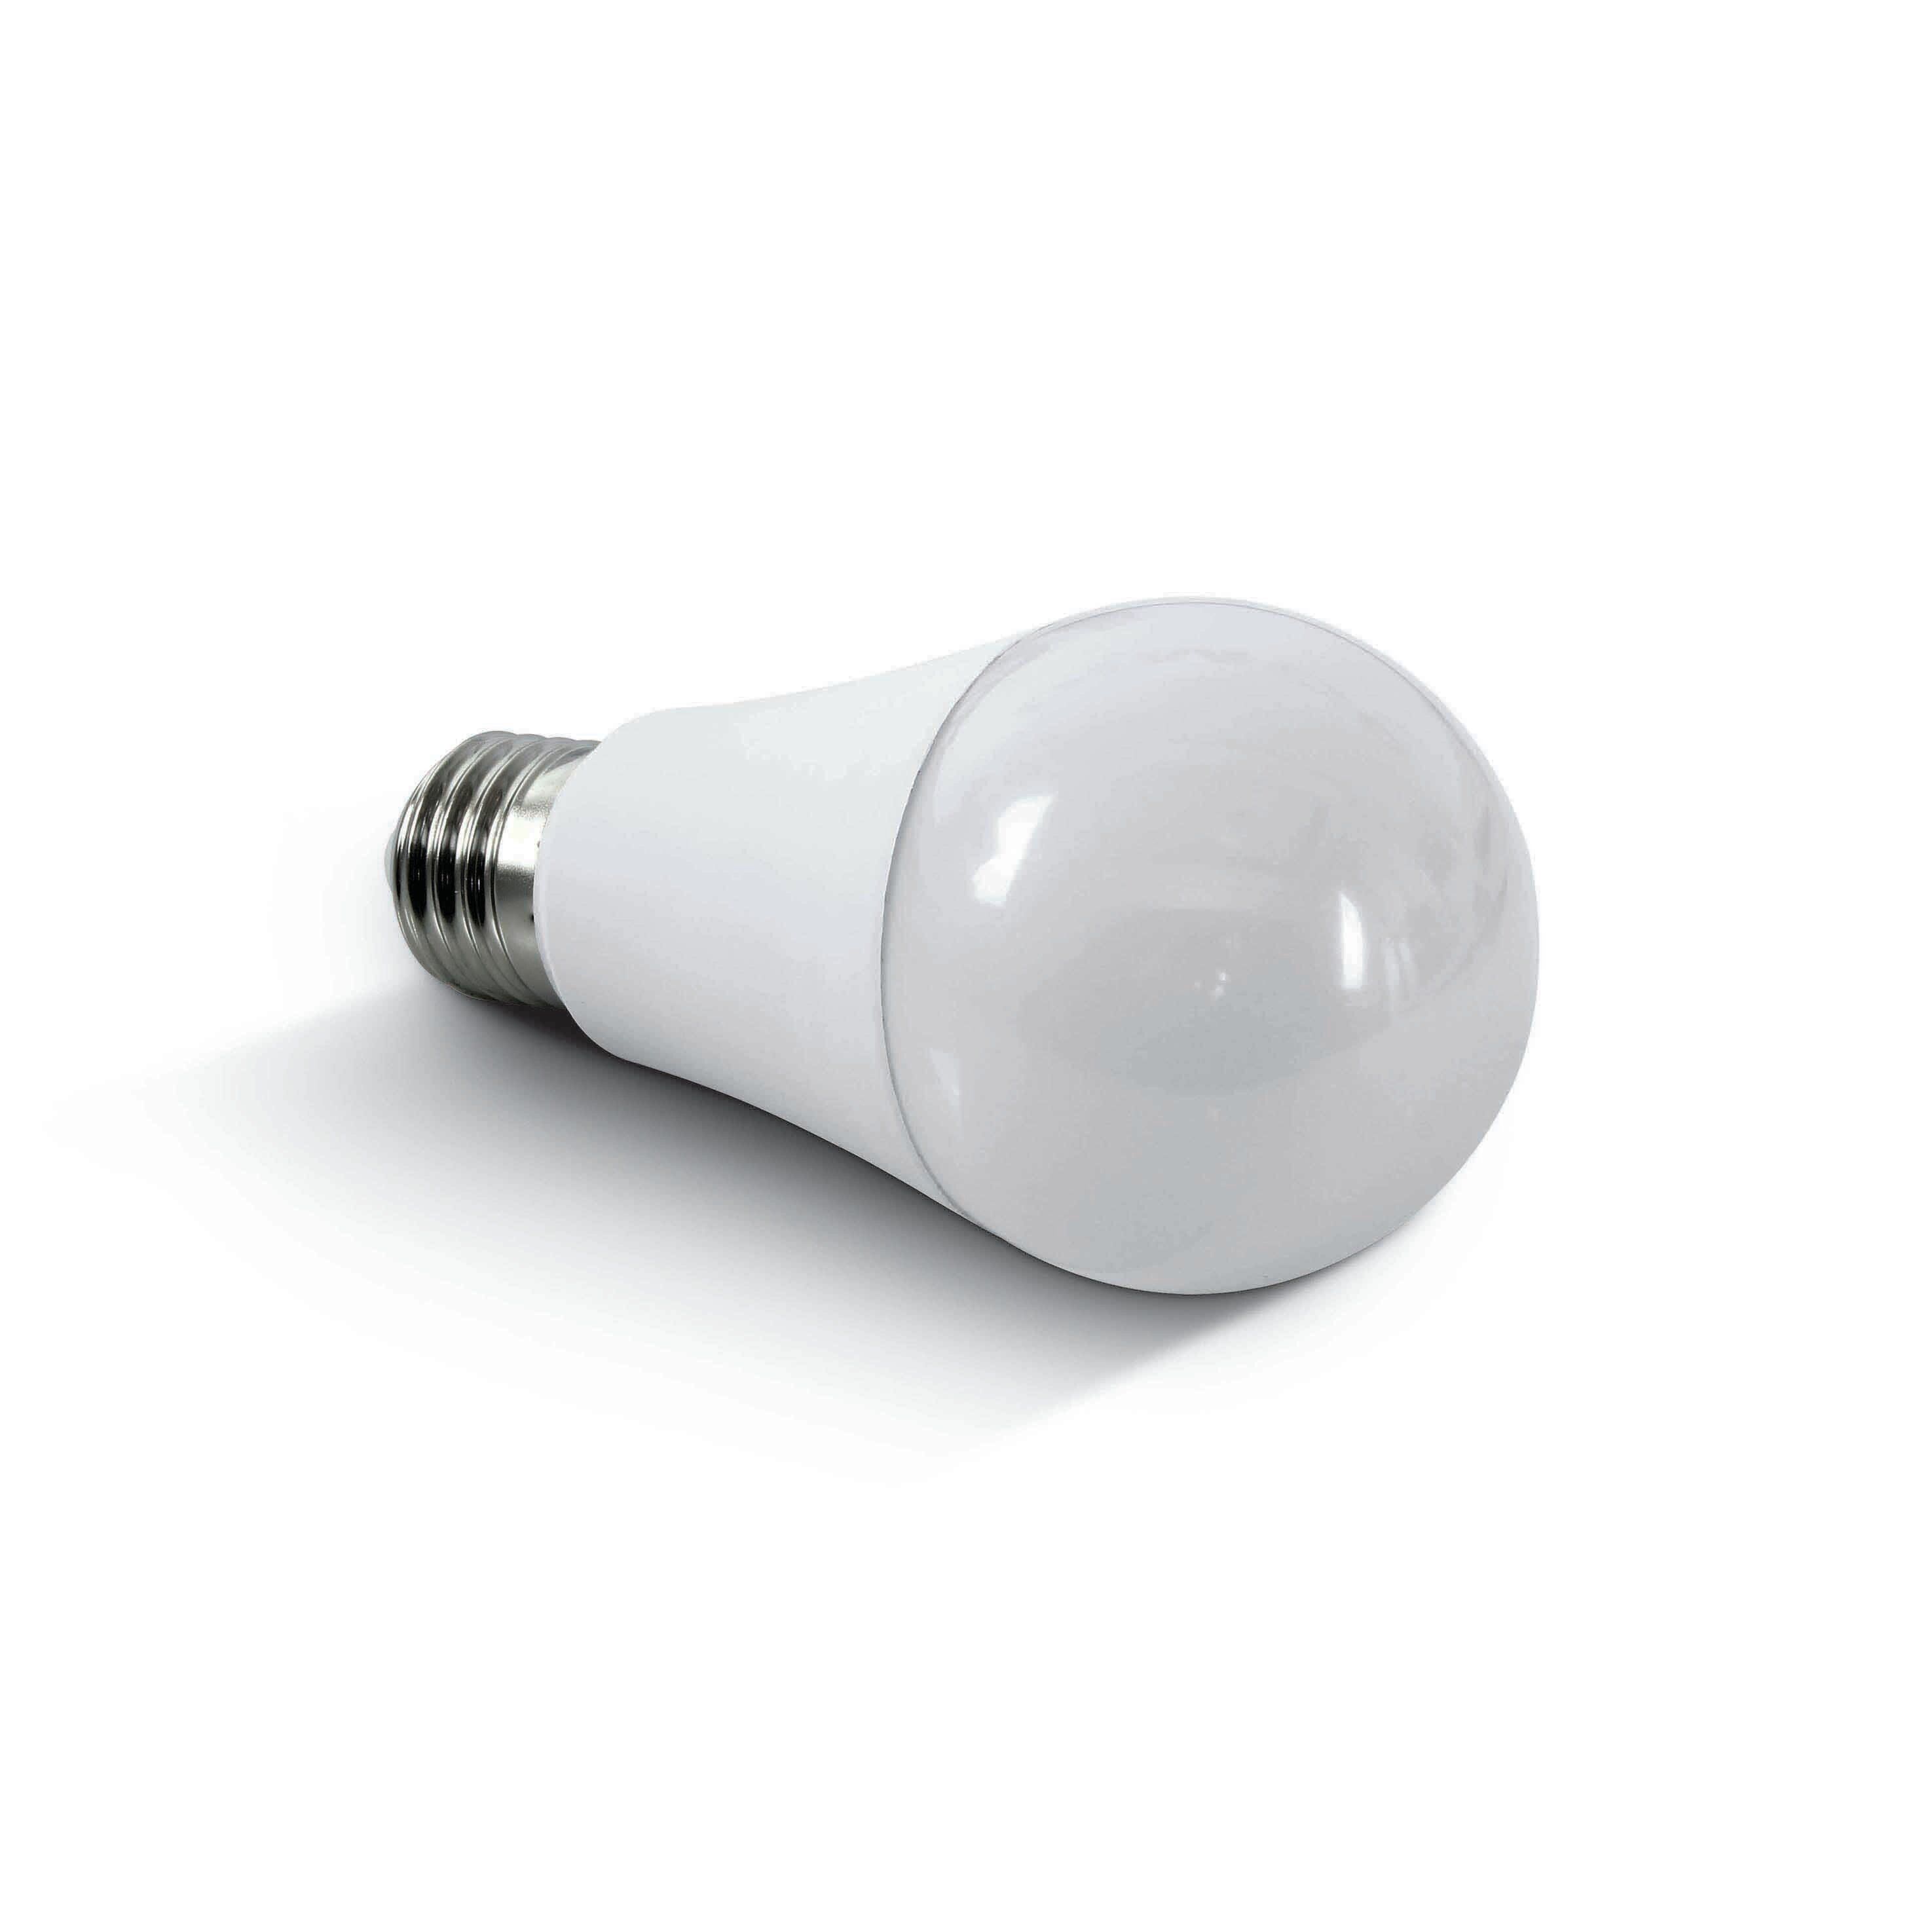 Duizeligheid Ellendig contrast ONE Light A60 Classic LED lamp - Ø 6 x 12 cm - E27 - 10W - niet-dimbaar -  3-stappen CCT (2700K-4000K-6500K) | Lichtkoning